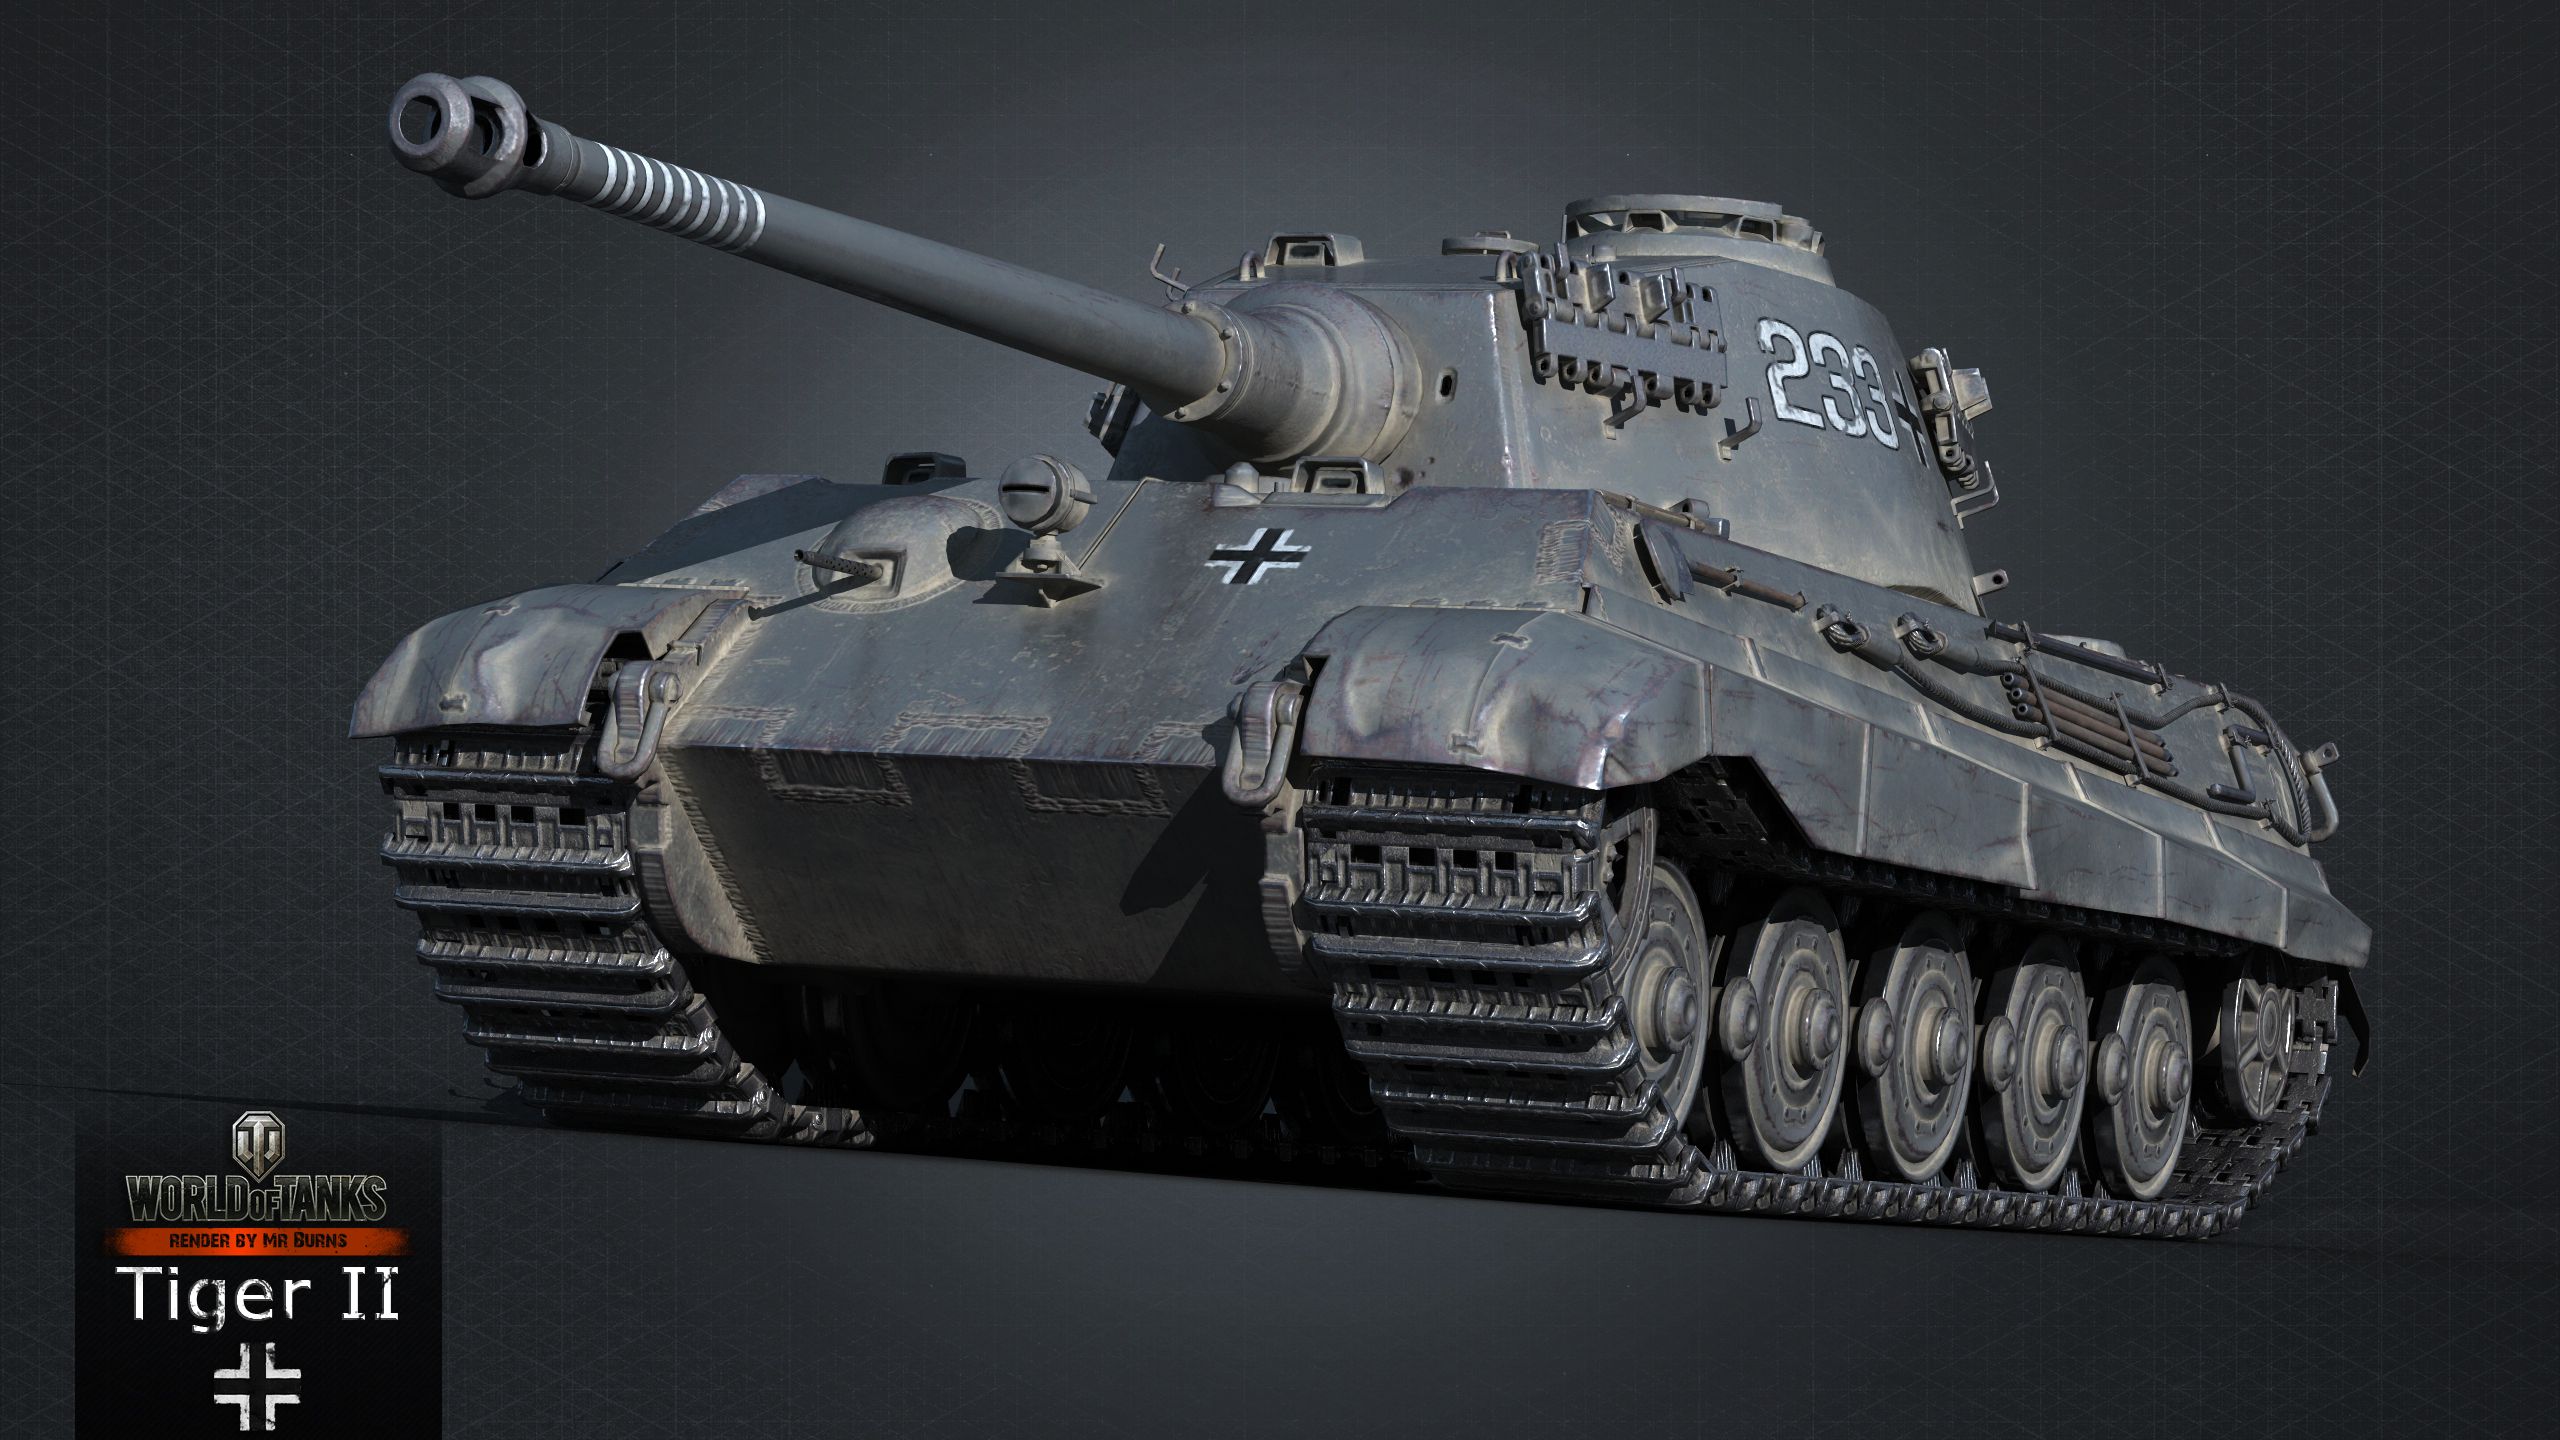 Photo WOT Tanks Tiger II 3D Graphics Games 2560x1440